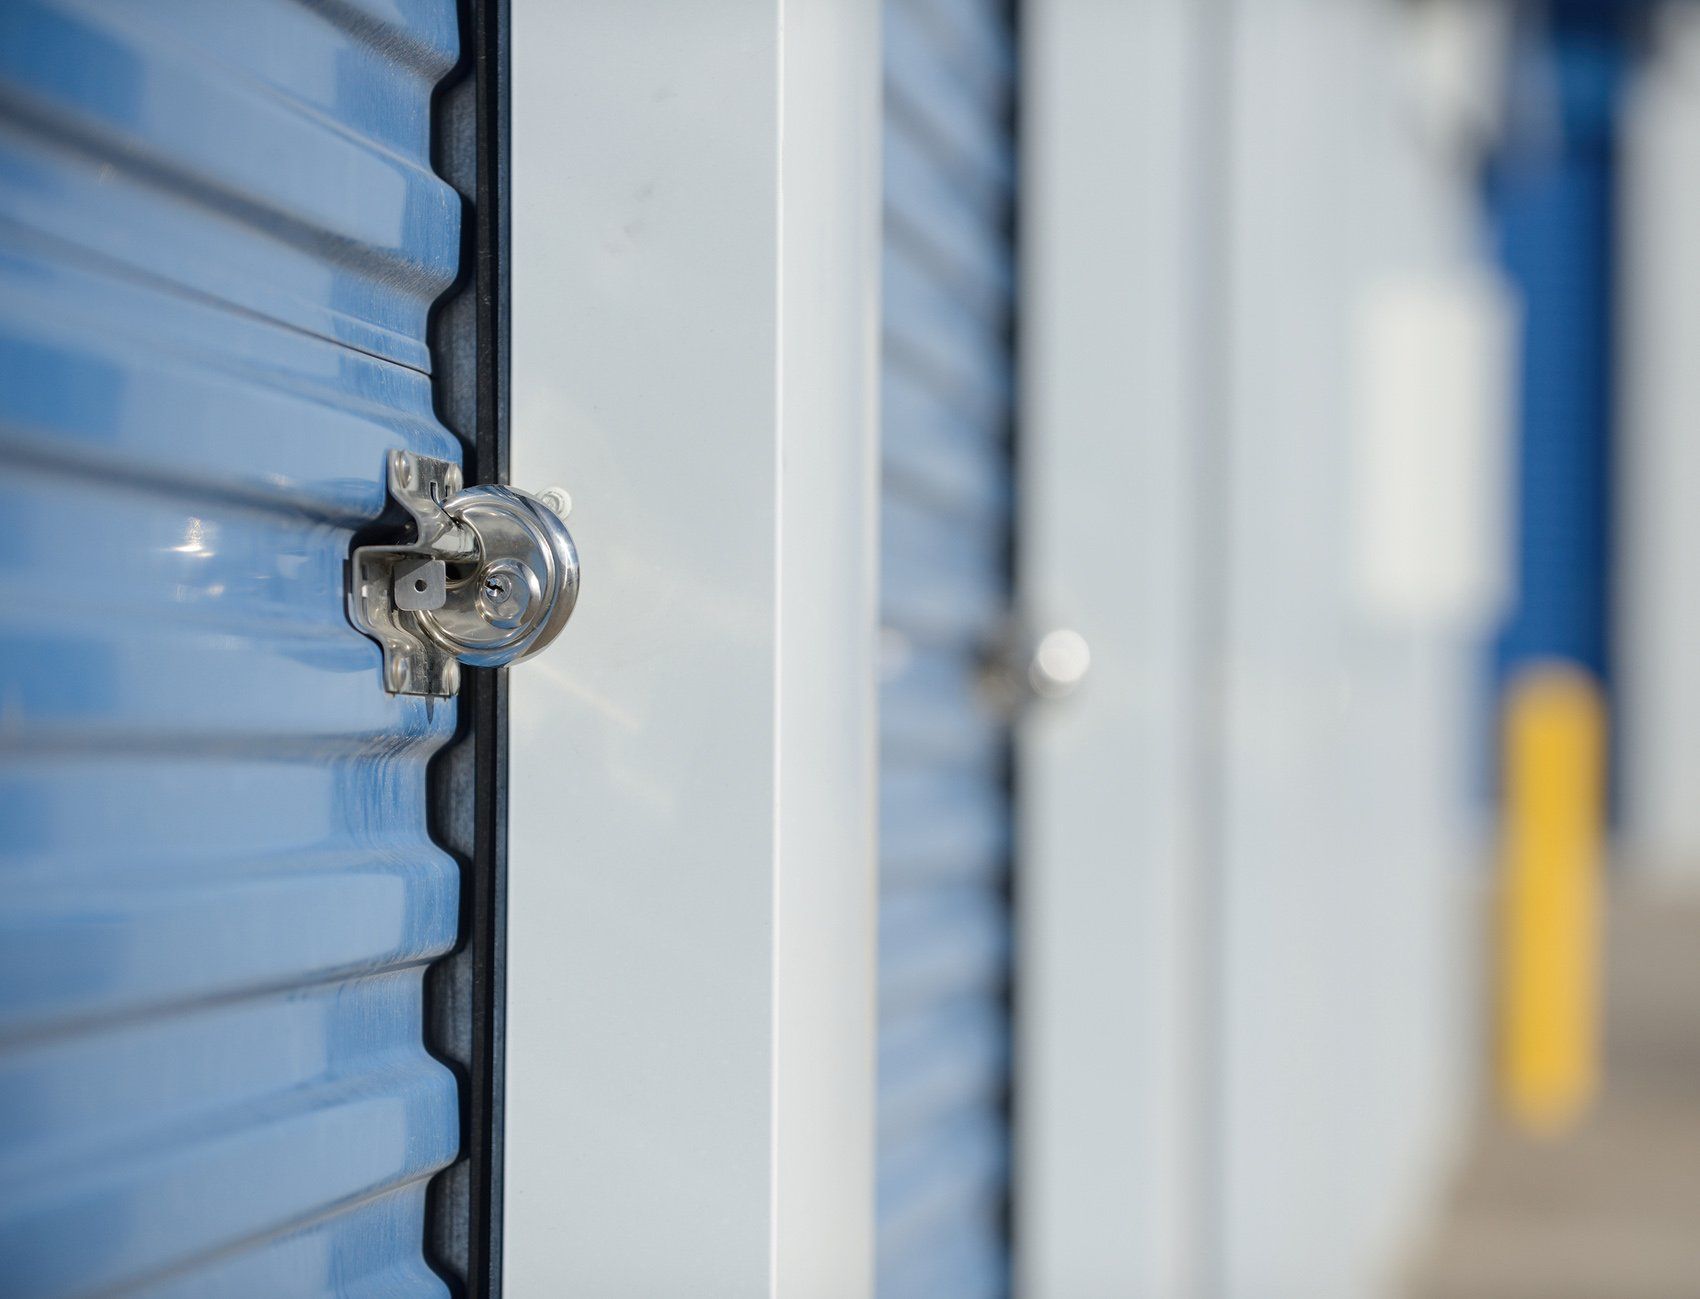 Storage Units — Blue Storage Units That Are Locked in Chico, CA